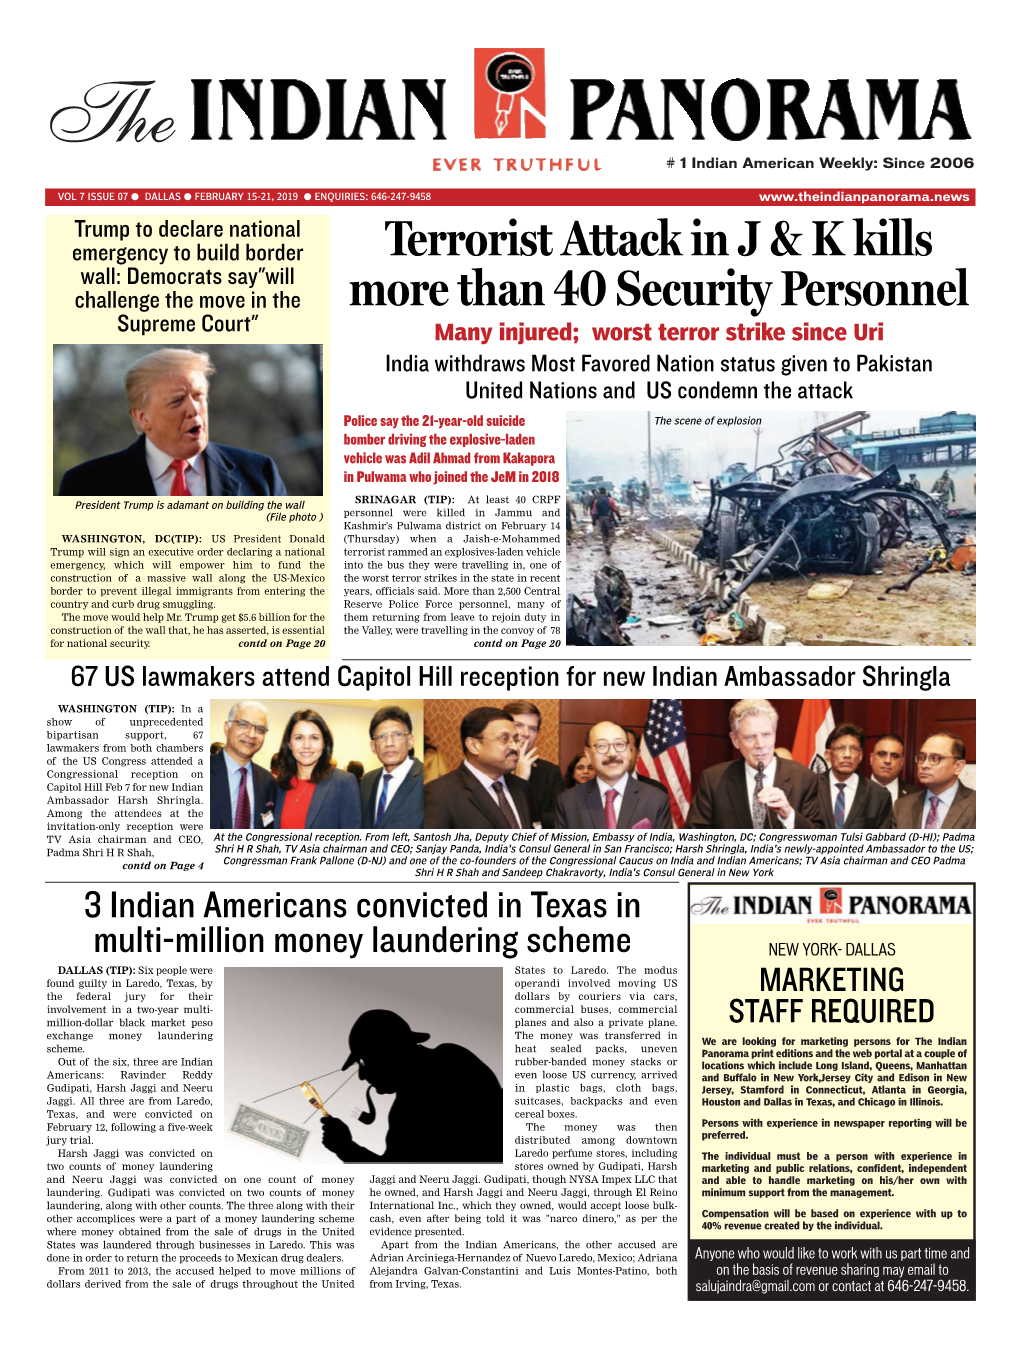 Terrorist Attack in J & K Kills More Than 40 Security Personnel